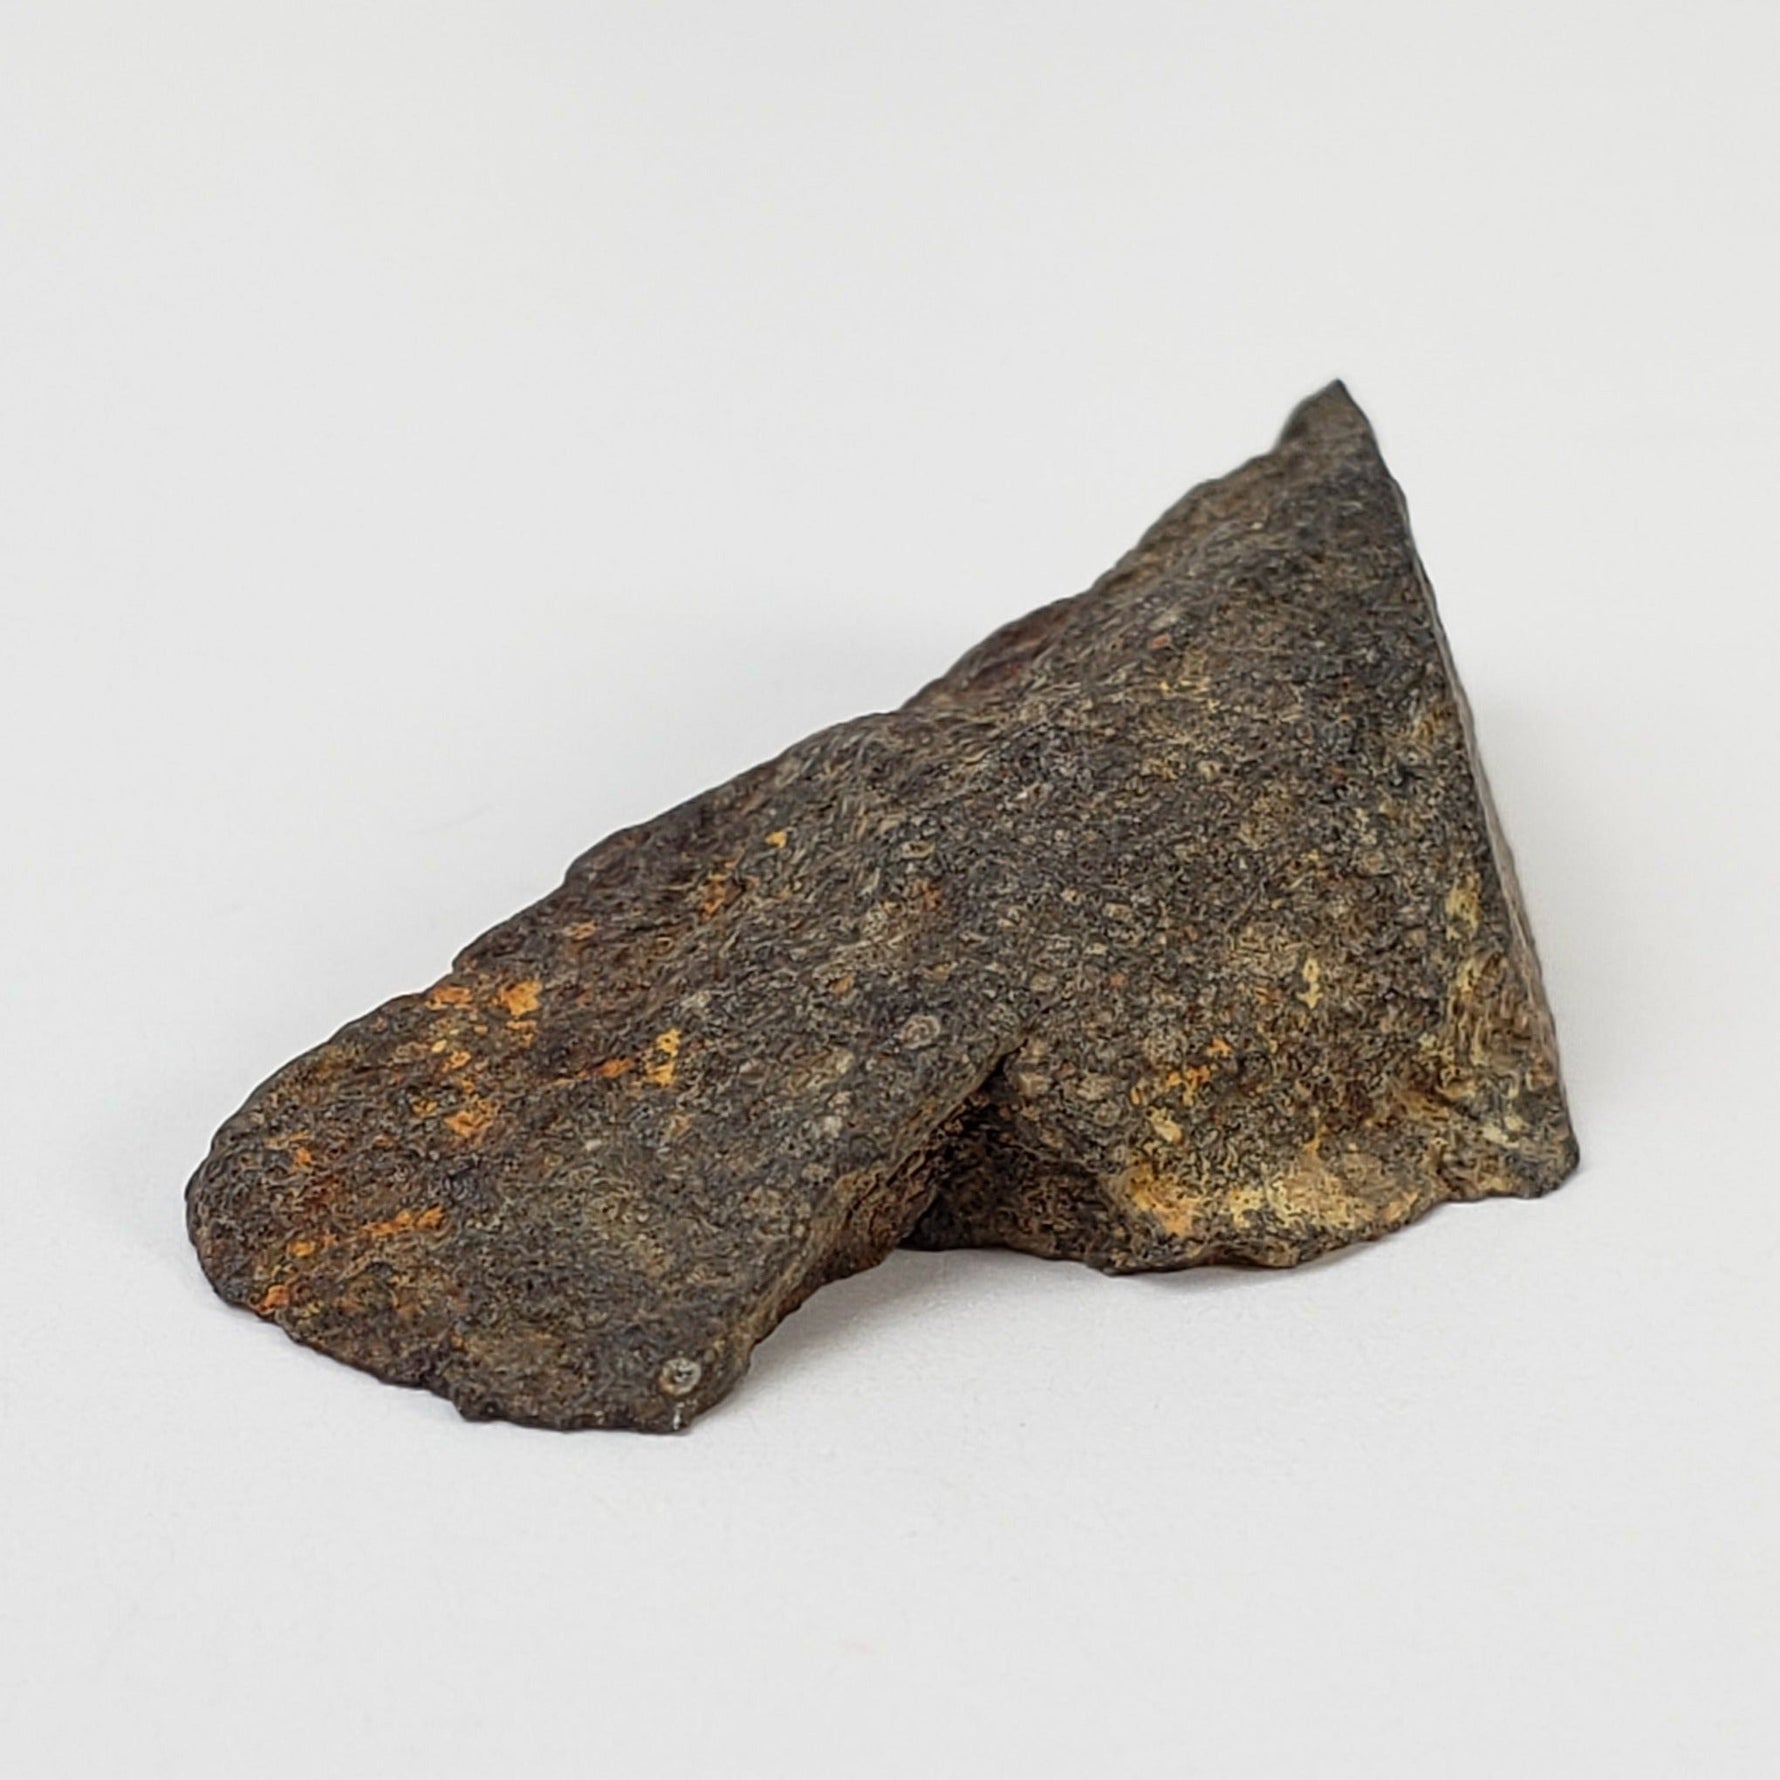 NWA 978 Meteorite | Rarest R3.8 Rumurutiite | 5.02 Grams | End Cut